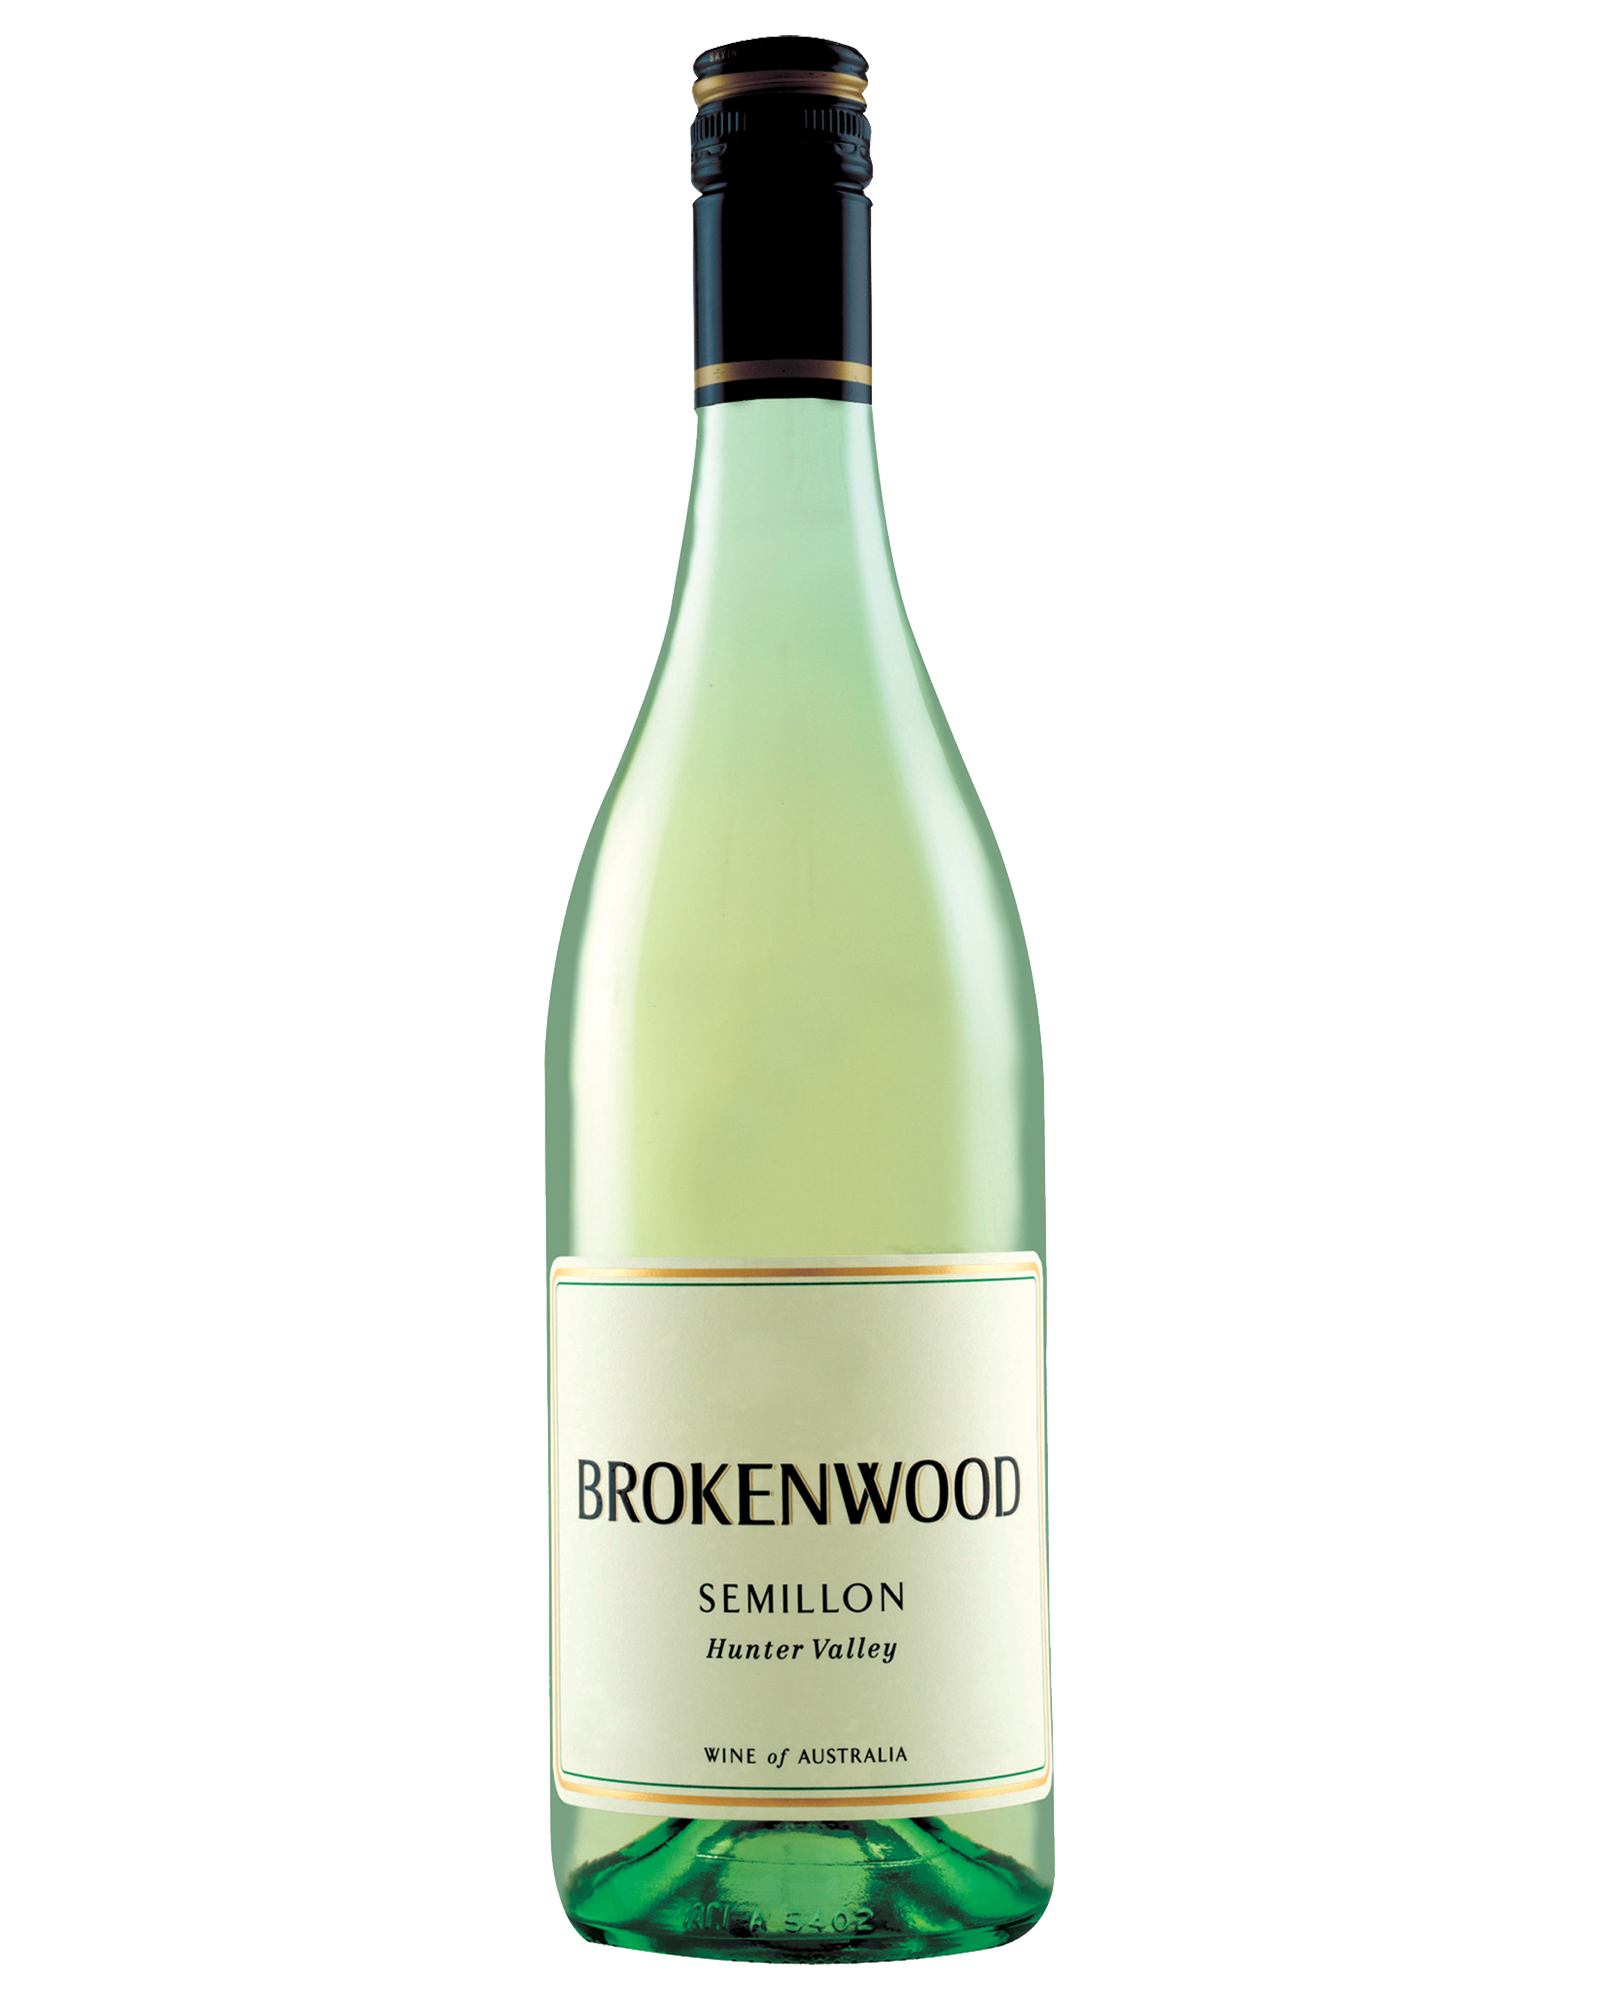 Brokenwood Semillon 2012